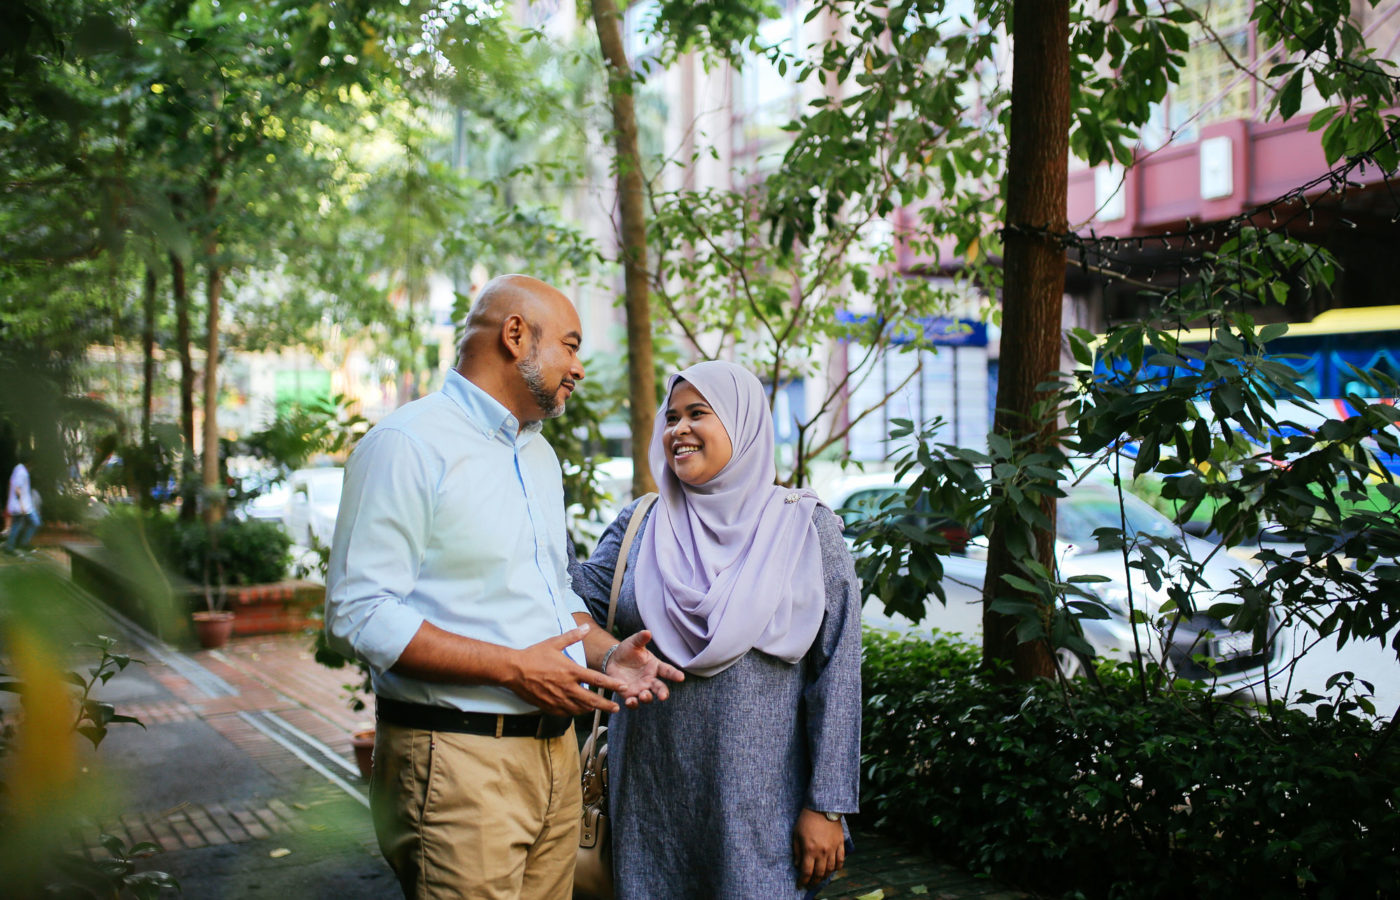 Muslim couple walk through a park in the sunshine